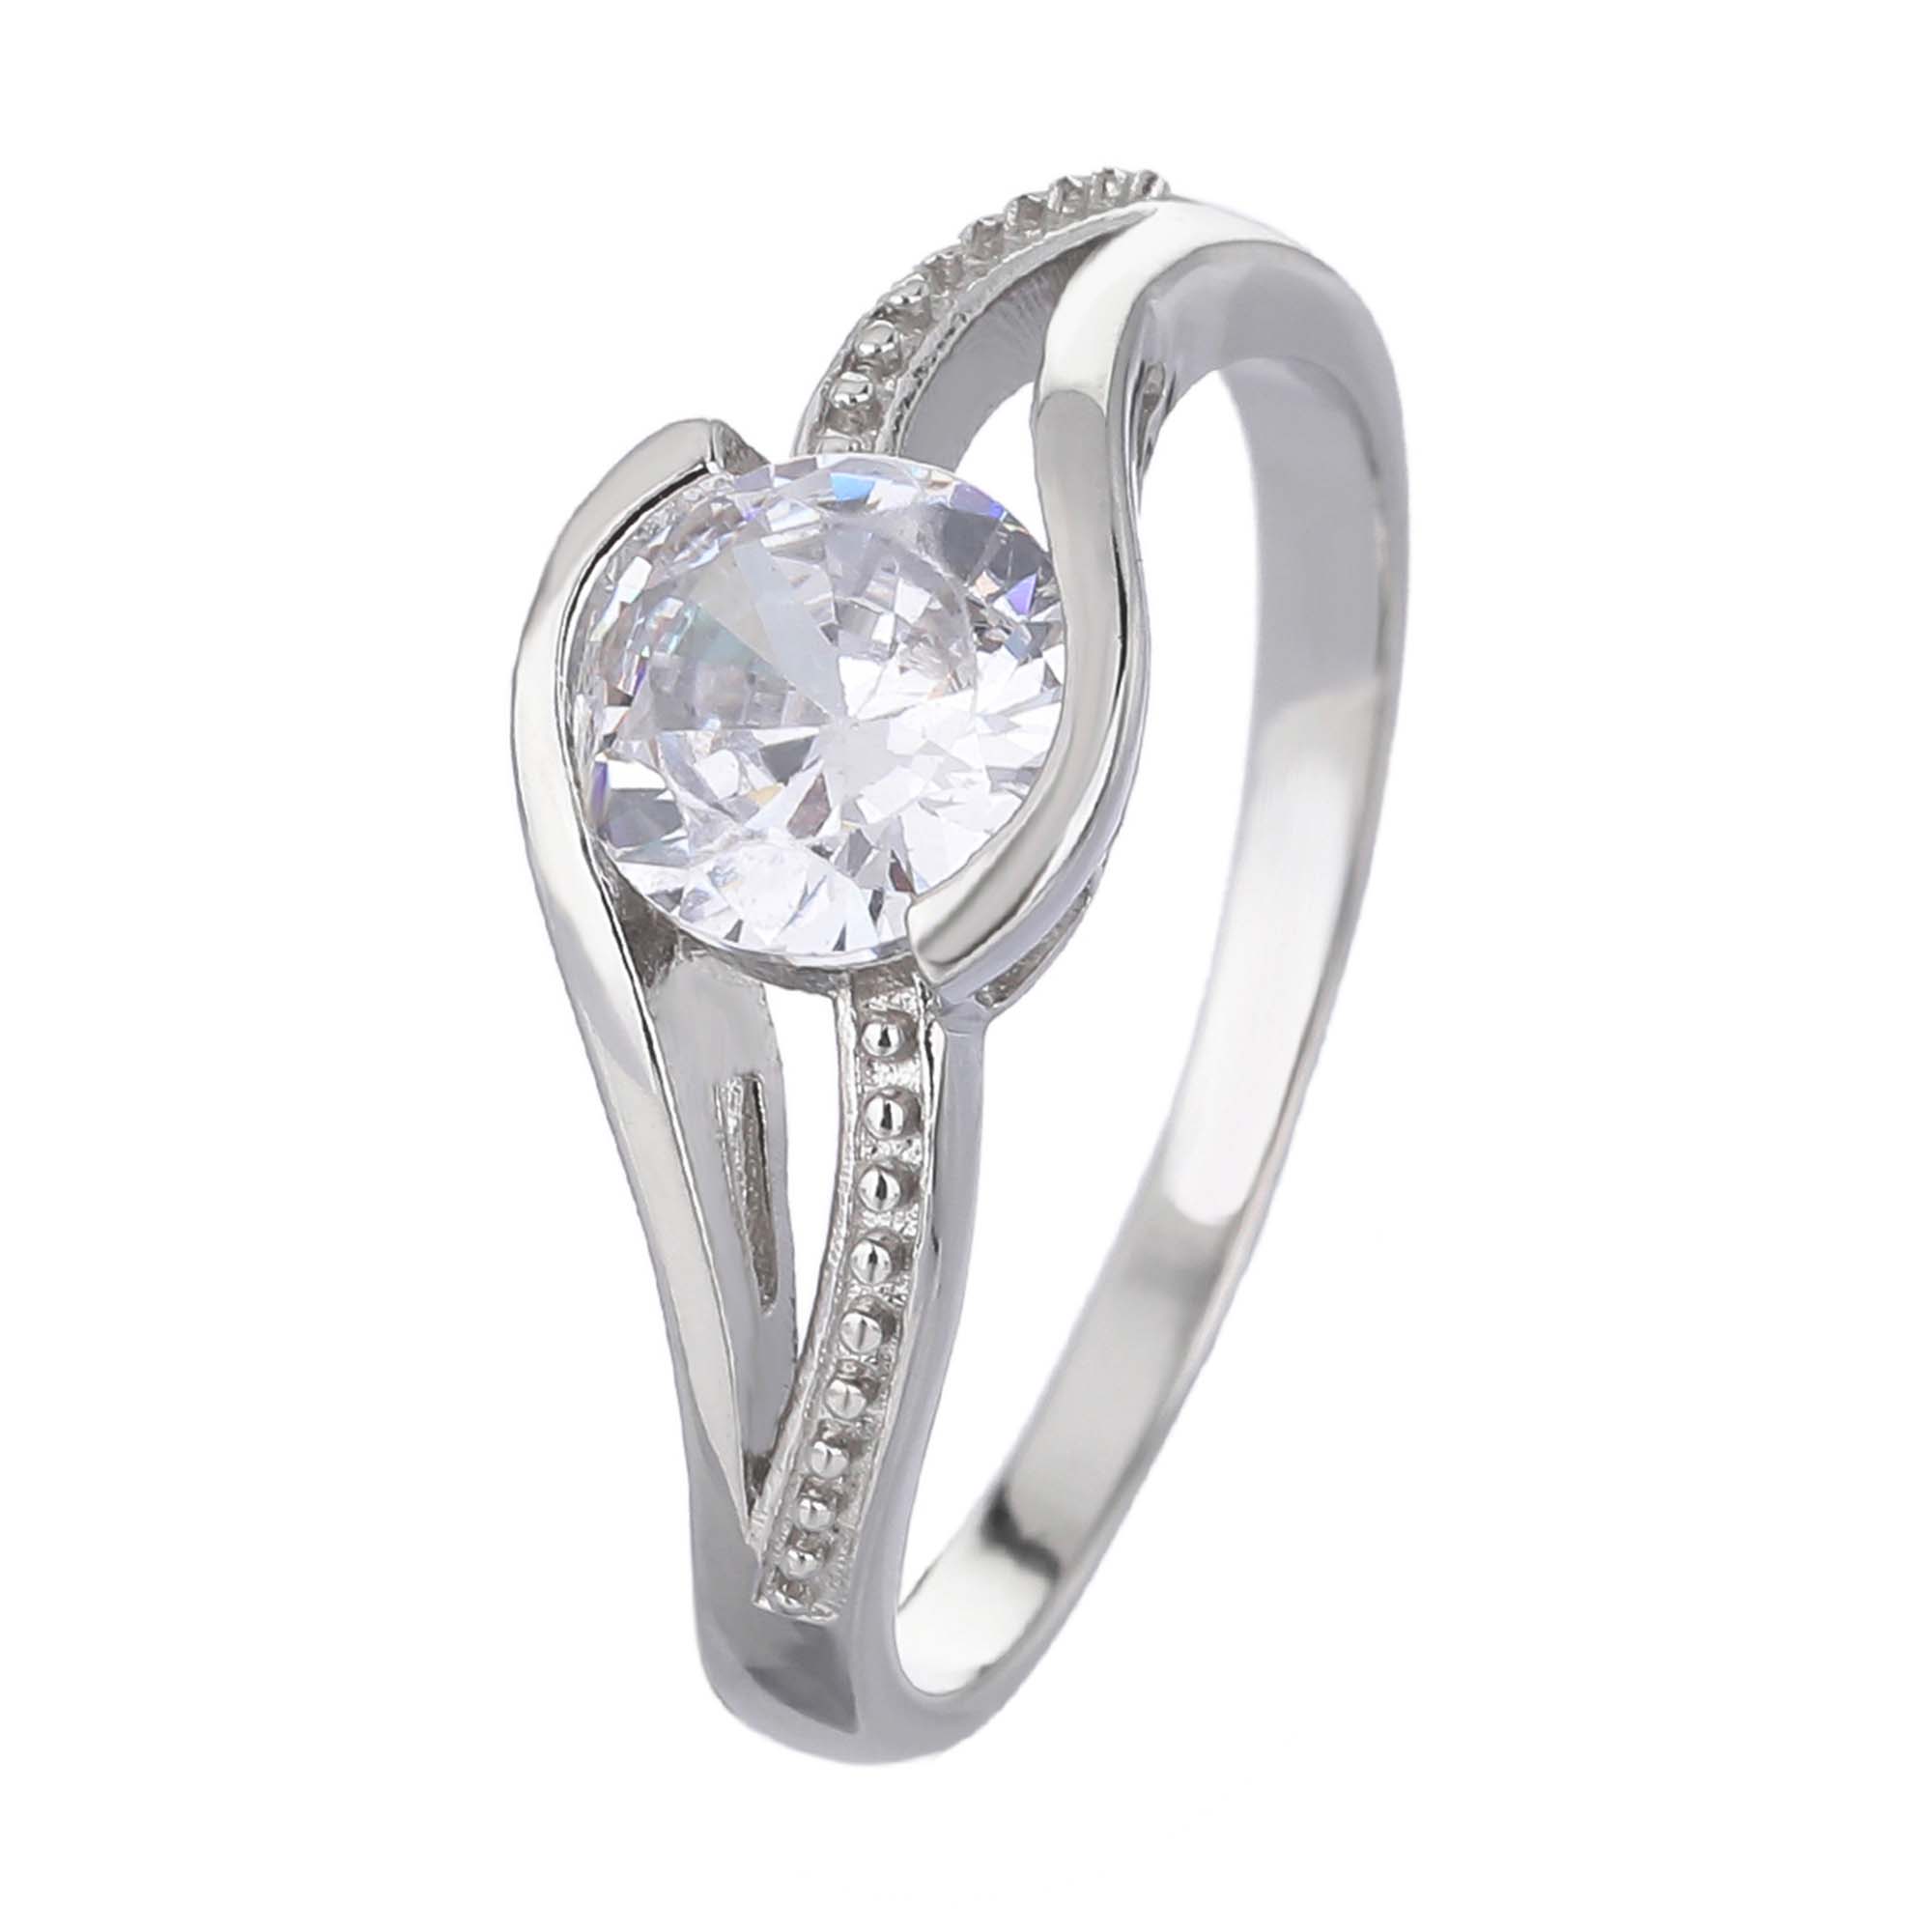 Stříbrný prsten SOLITÉR bílý VLNKY Velikost prstenu: 60 Ag 925/1000